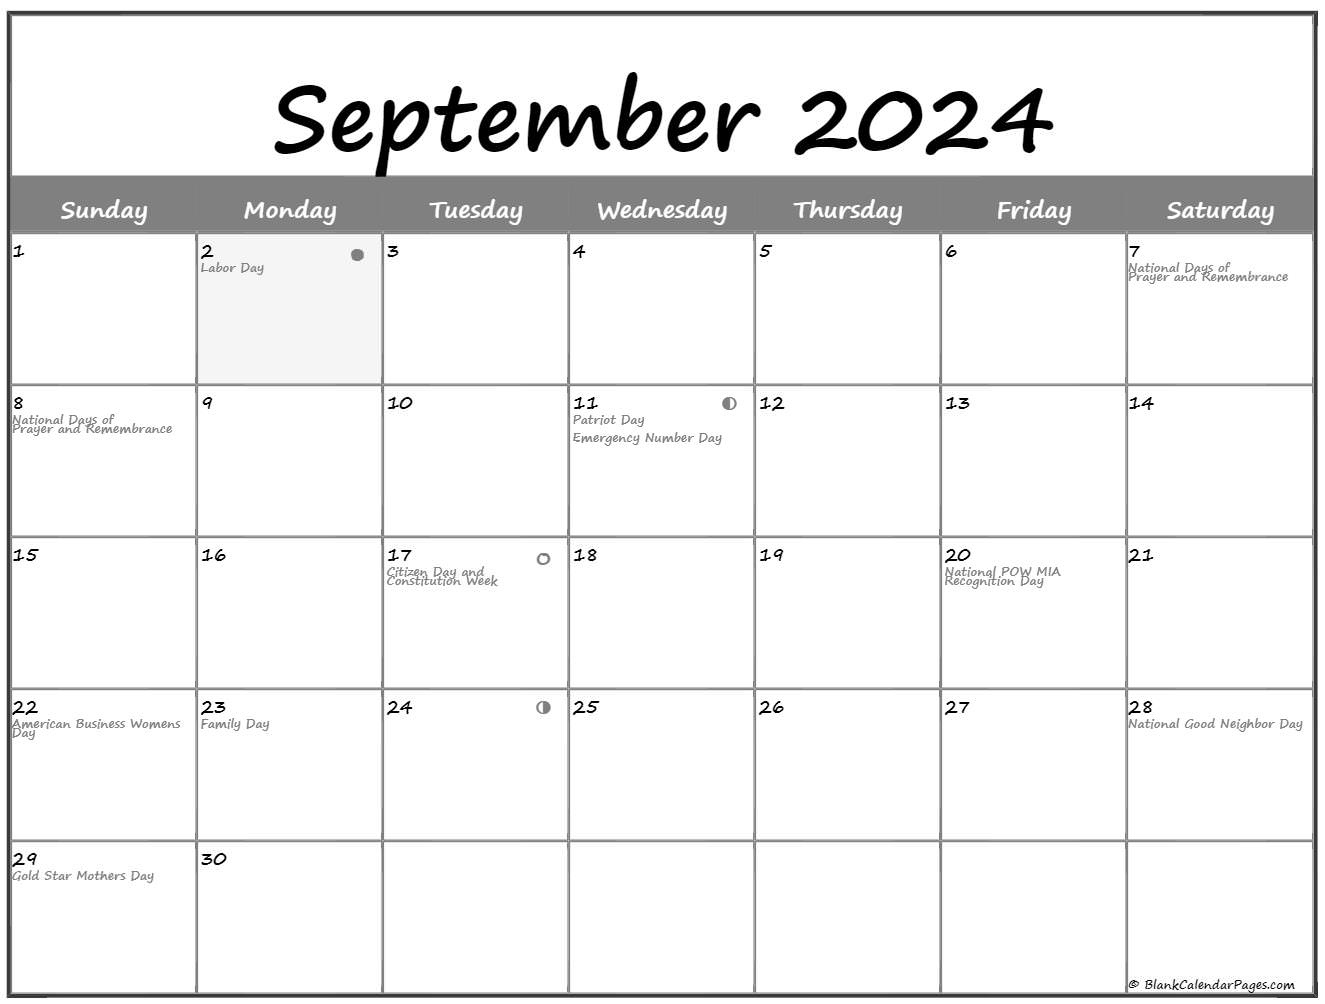 Moon Calendar October 2022 September 2022 Lunar Calendar | Moon Phase Calendar